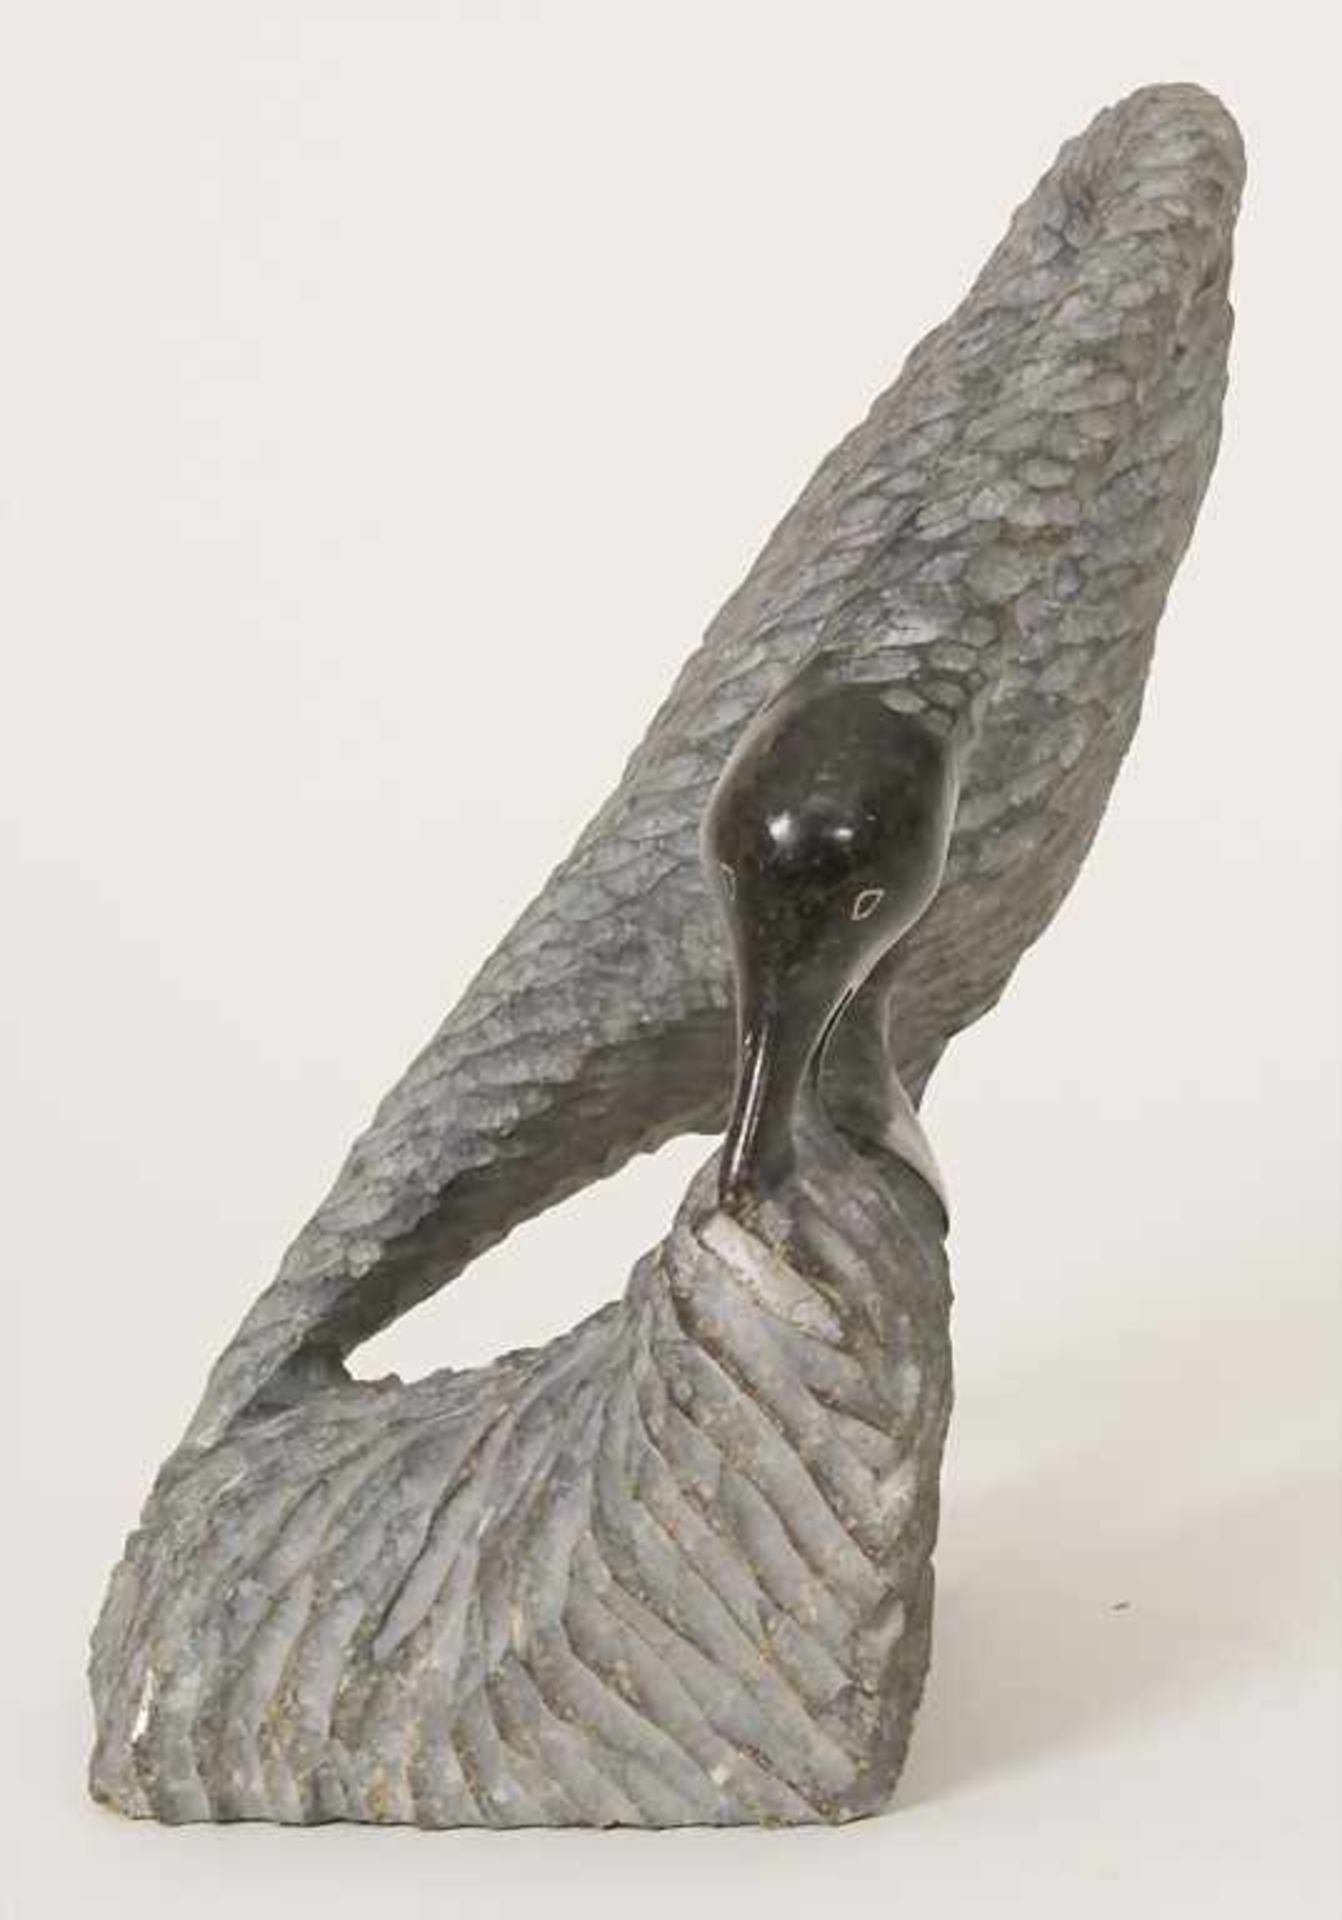 Tierfigur 'Wasservogel' / An animal figure 'Water bird', wohl Afrika, 20. Jh.Material: Speckstein, - Image 4 of 5